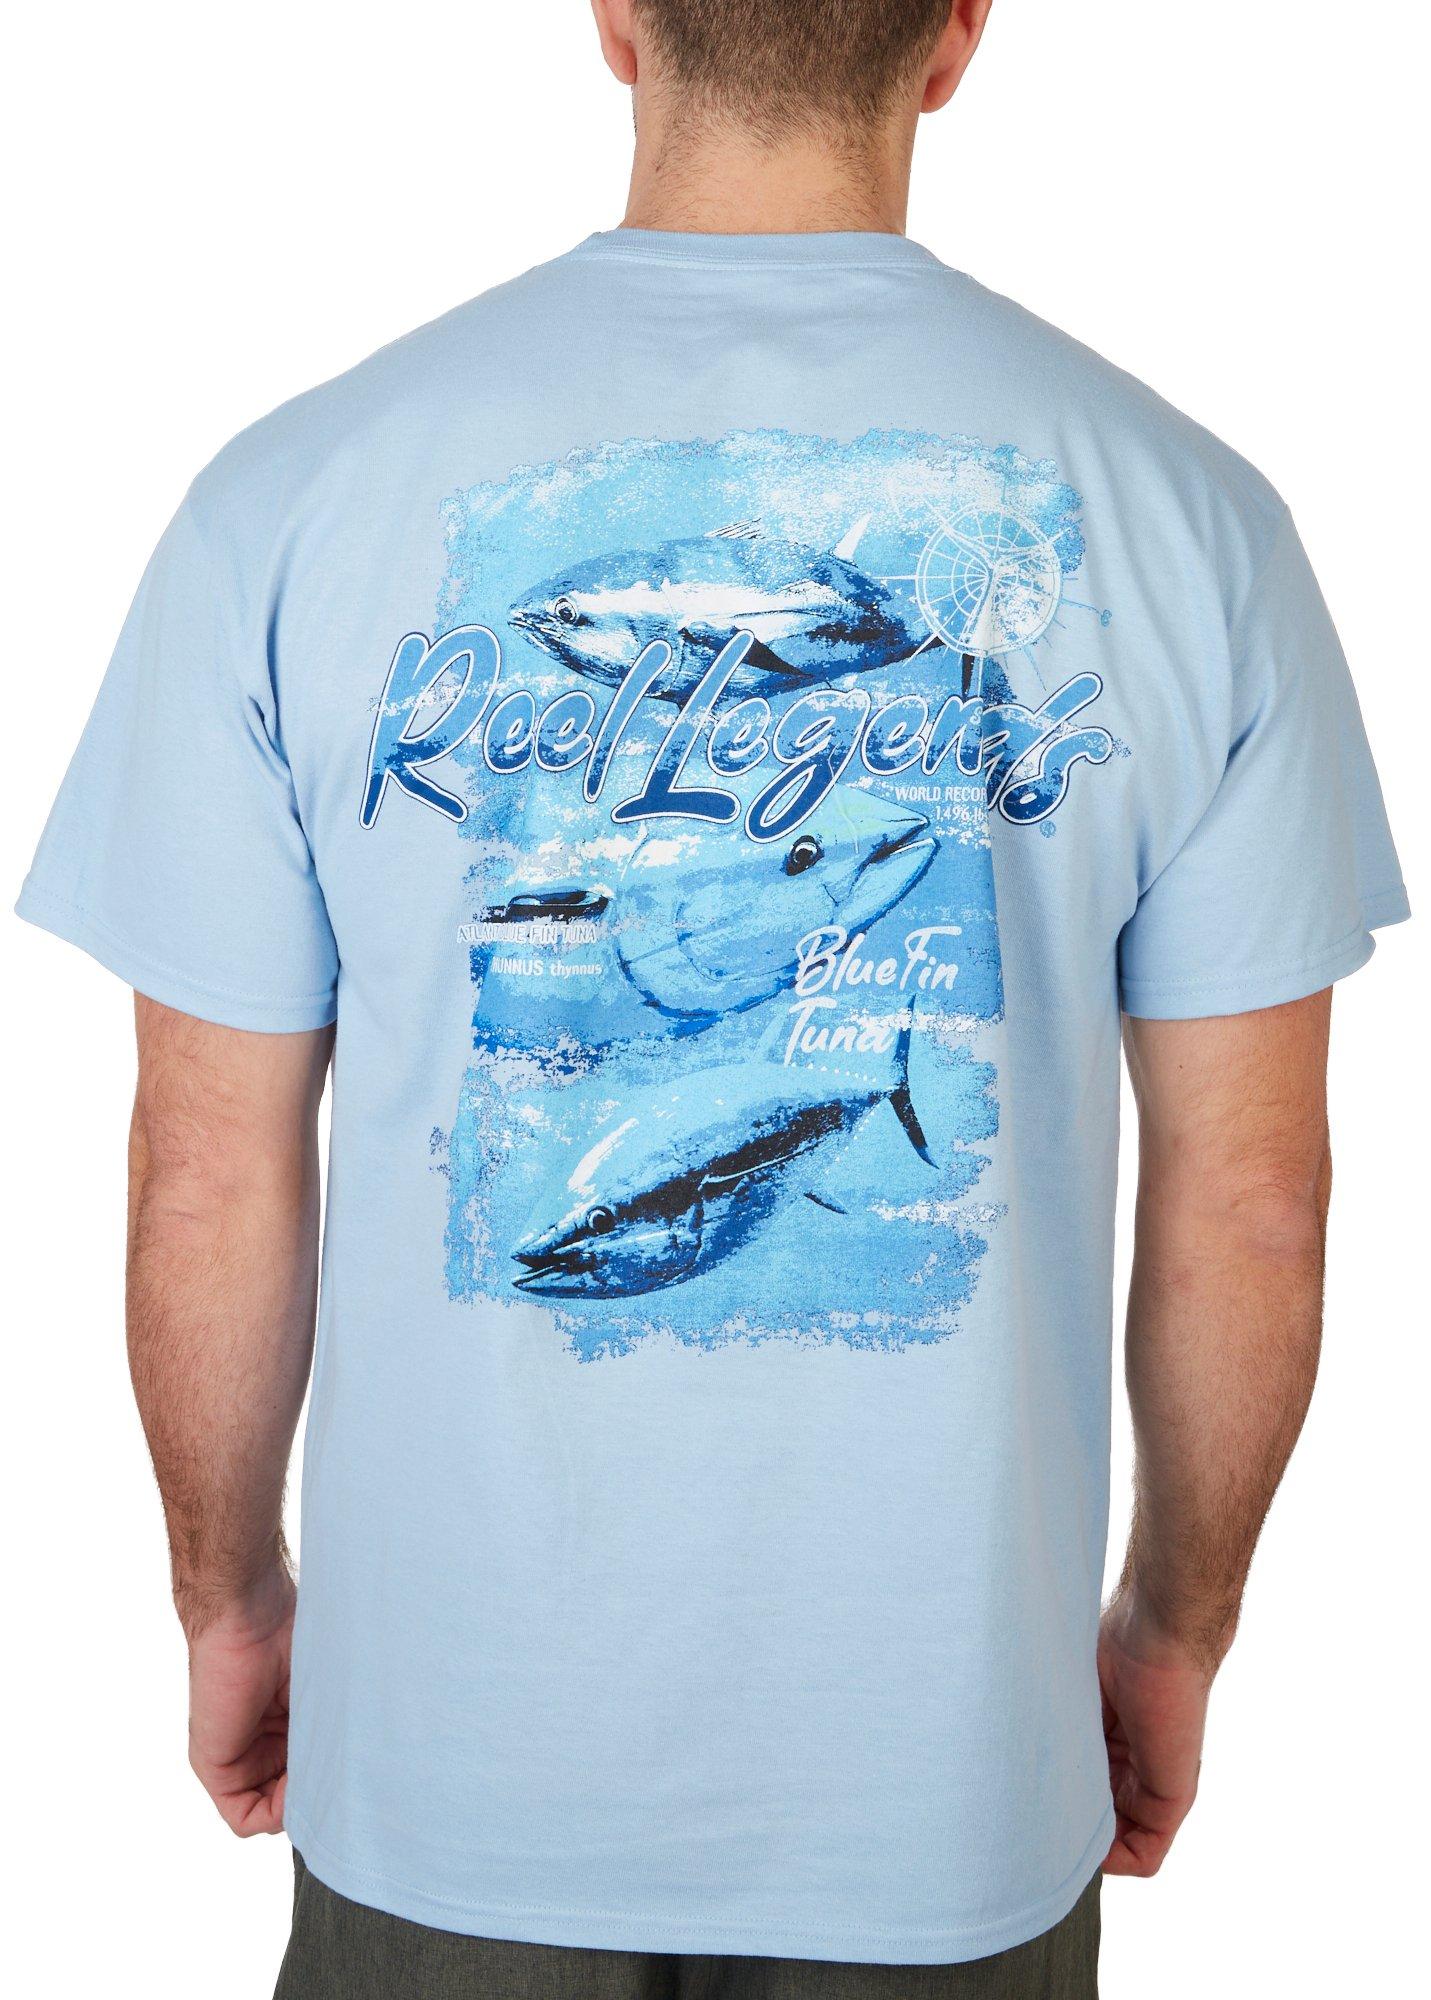 Reel Legends shirt Men's XL extra large Blue Bass fishing Gainesville  Florida